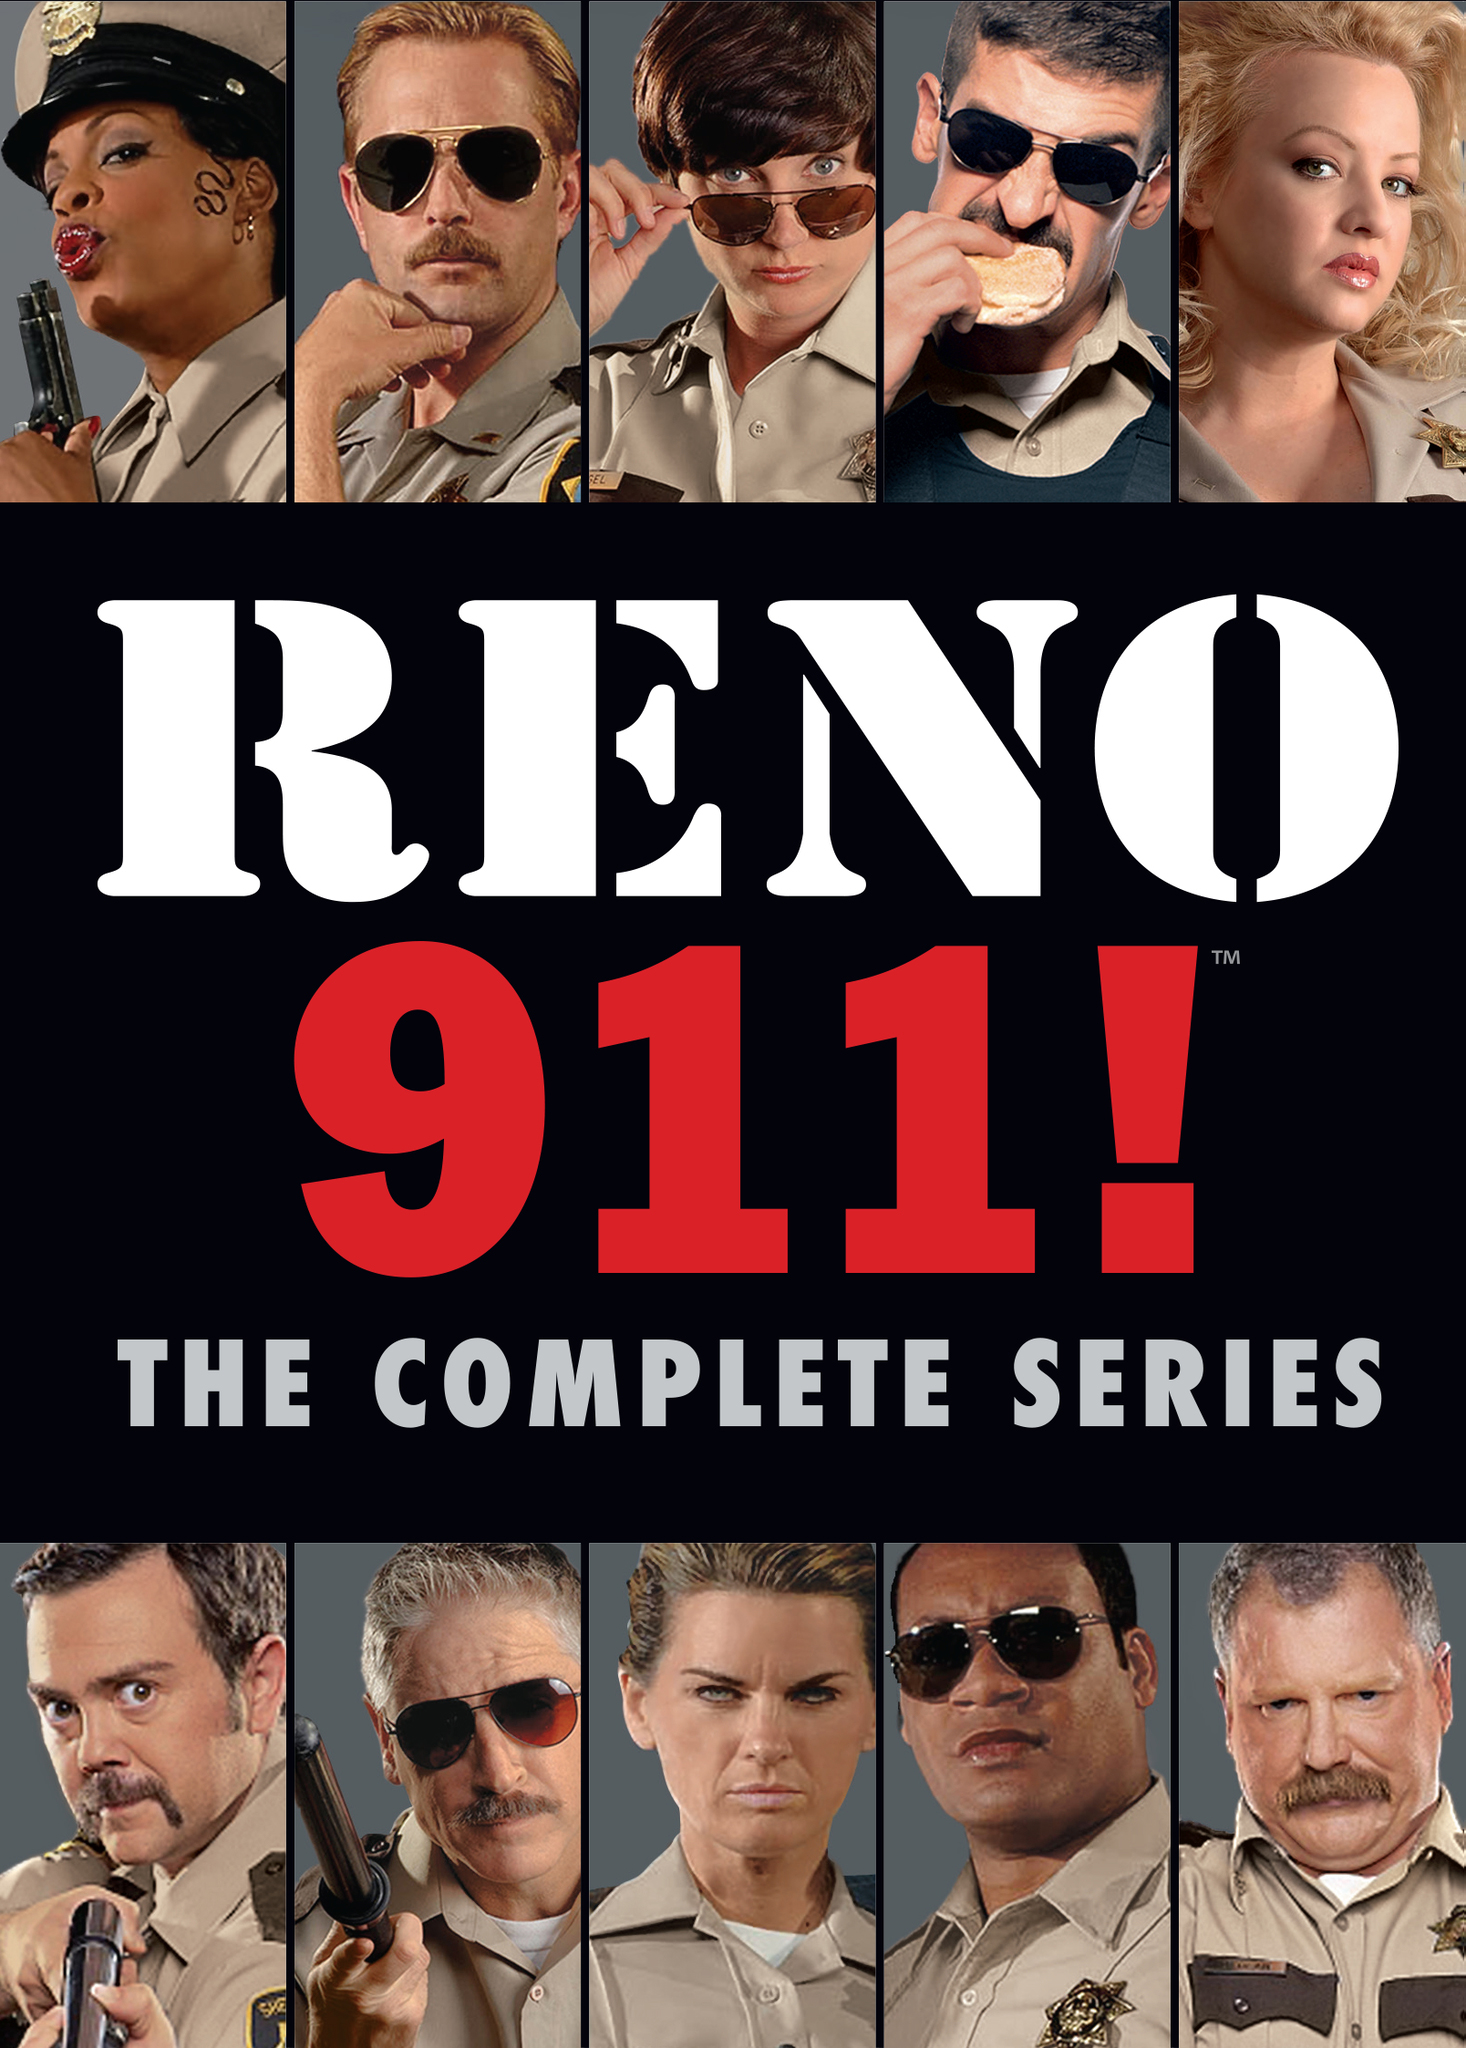 Reno 911! Season 7 - watch full episodes streaming online